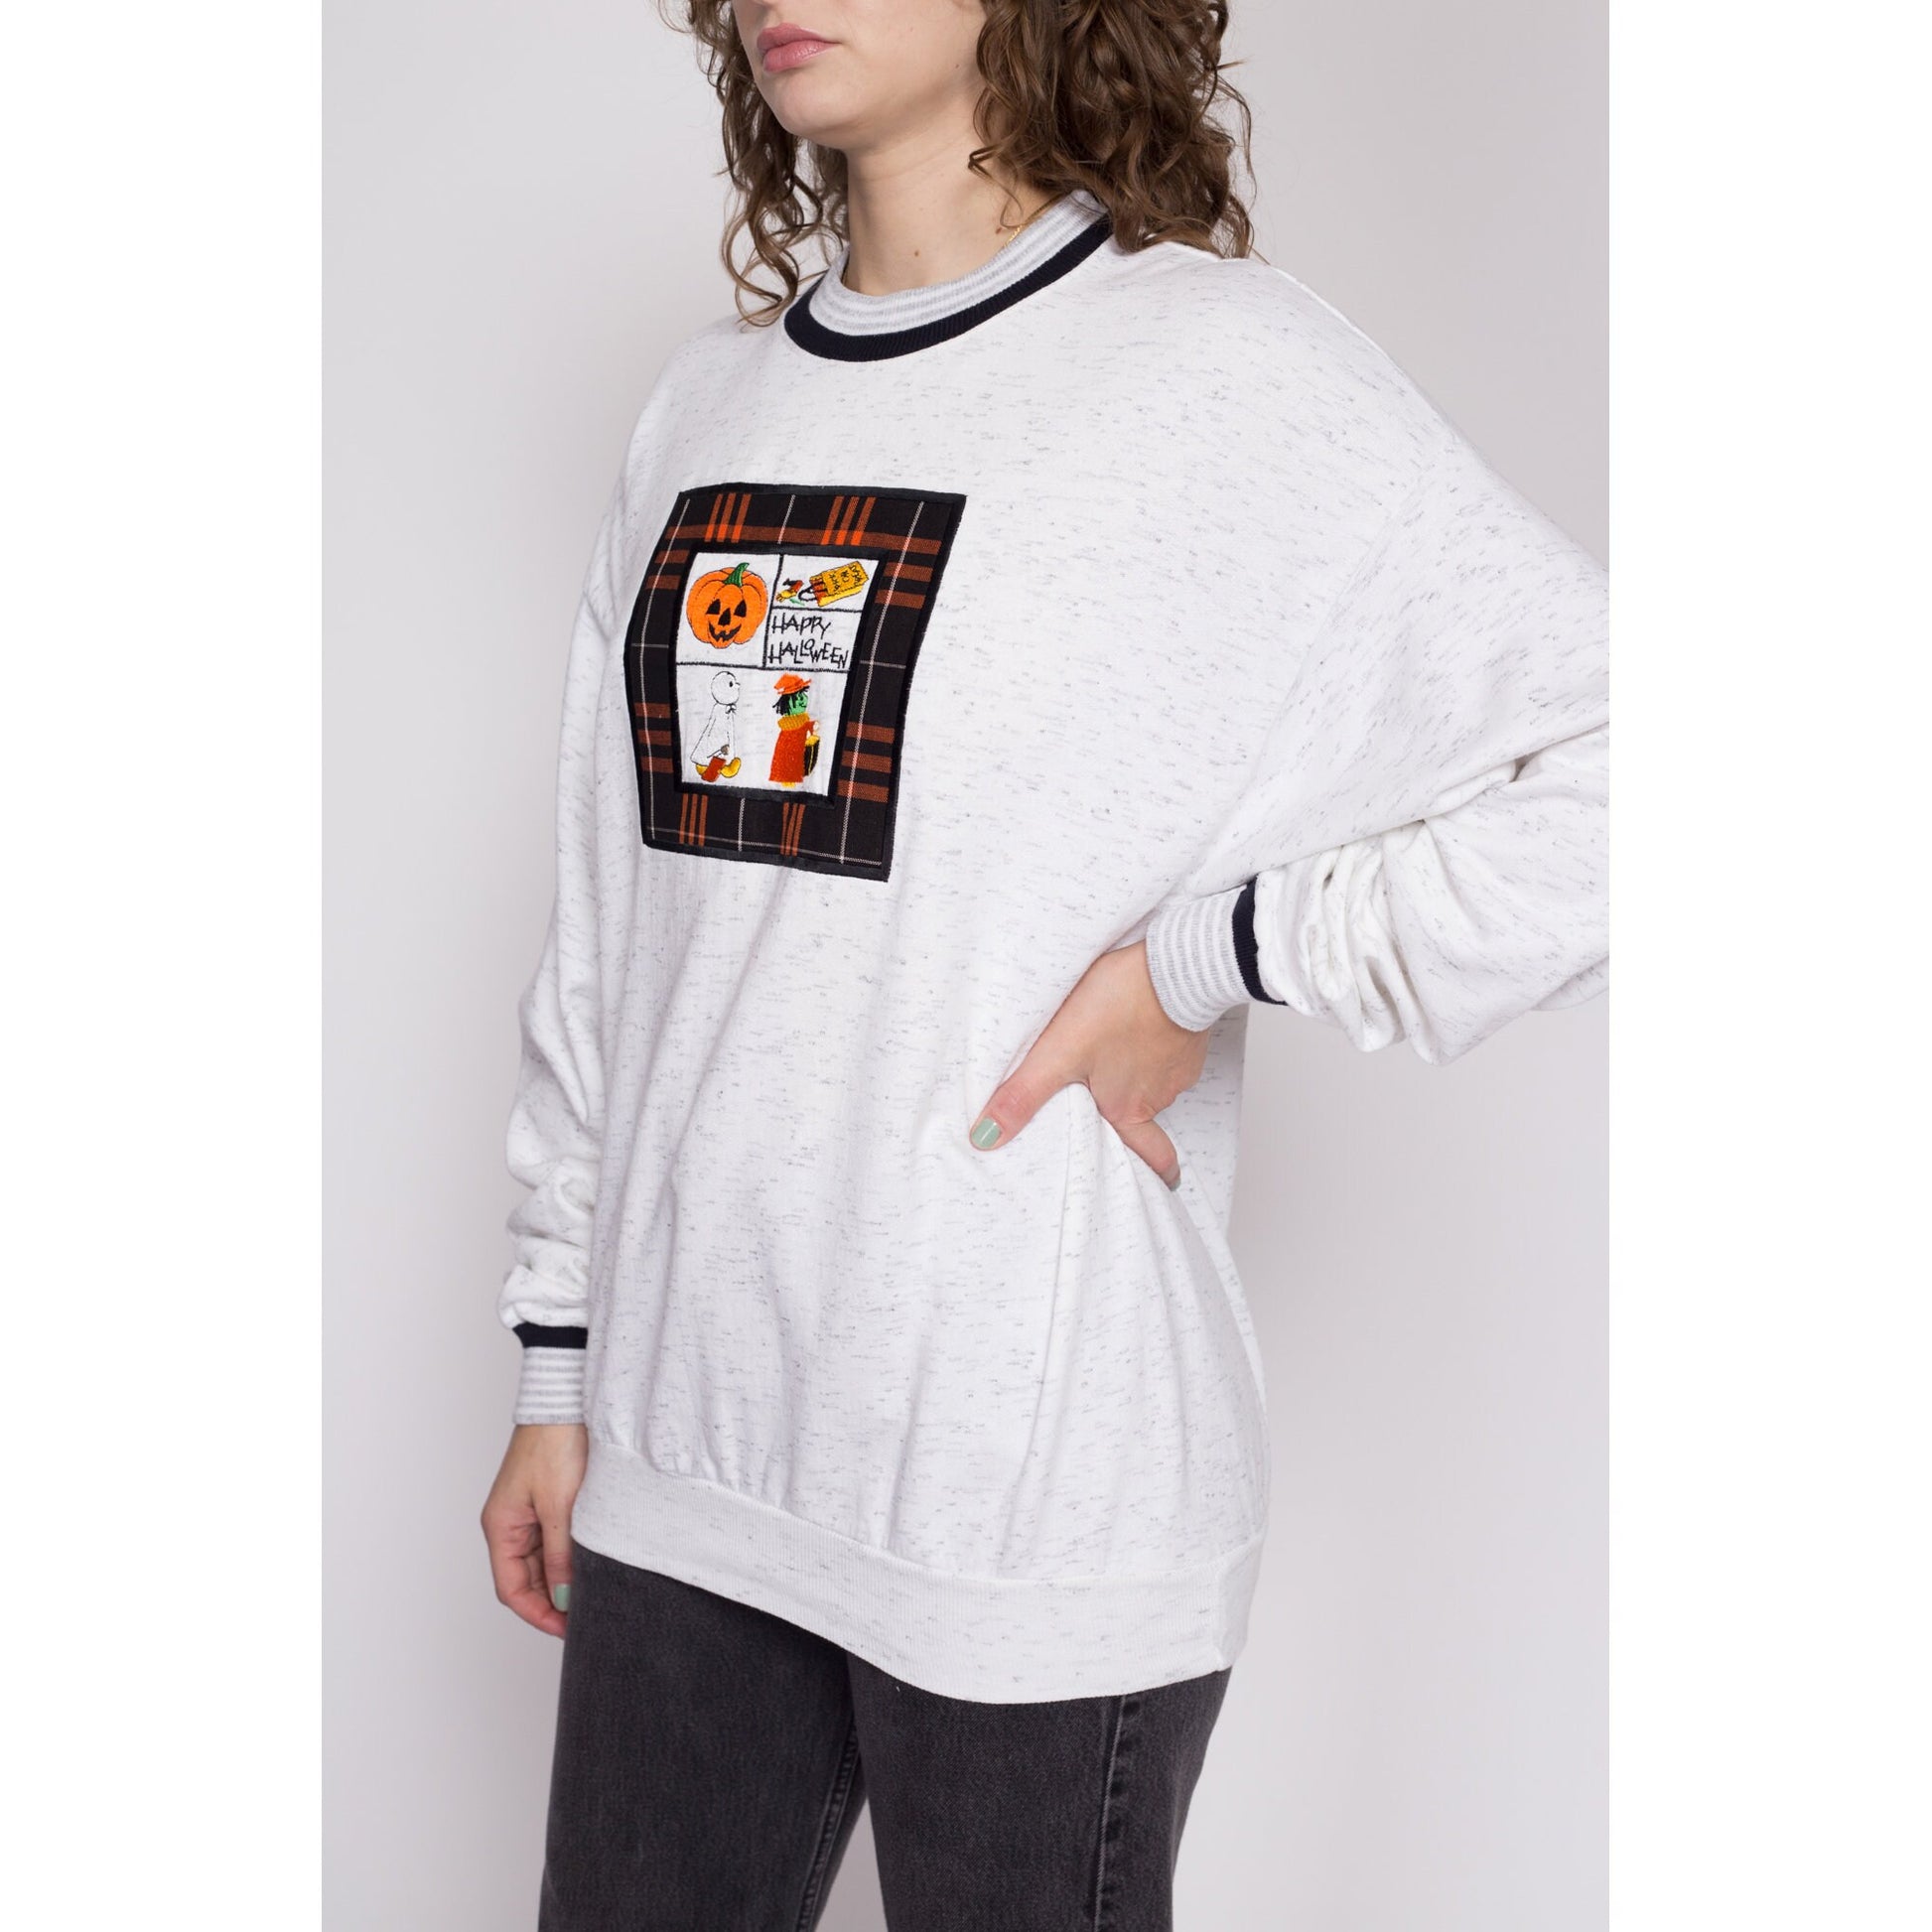 Lrg-XL 90s Halloween Sweatshirt Unisex | Vintage Trick Or Treat Graphic Crewneck Pullover